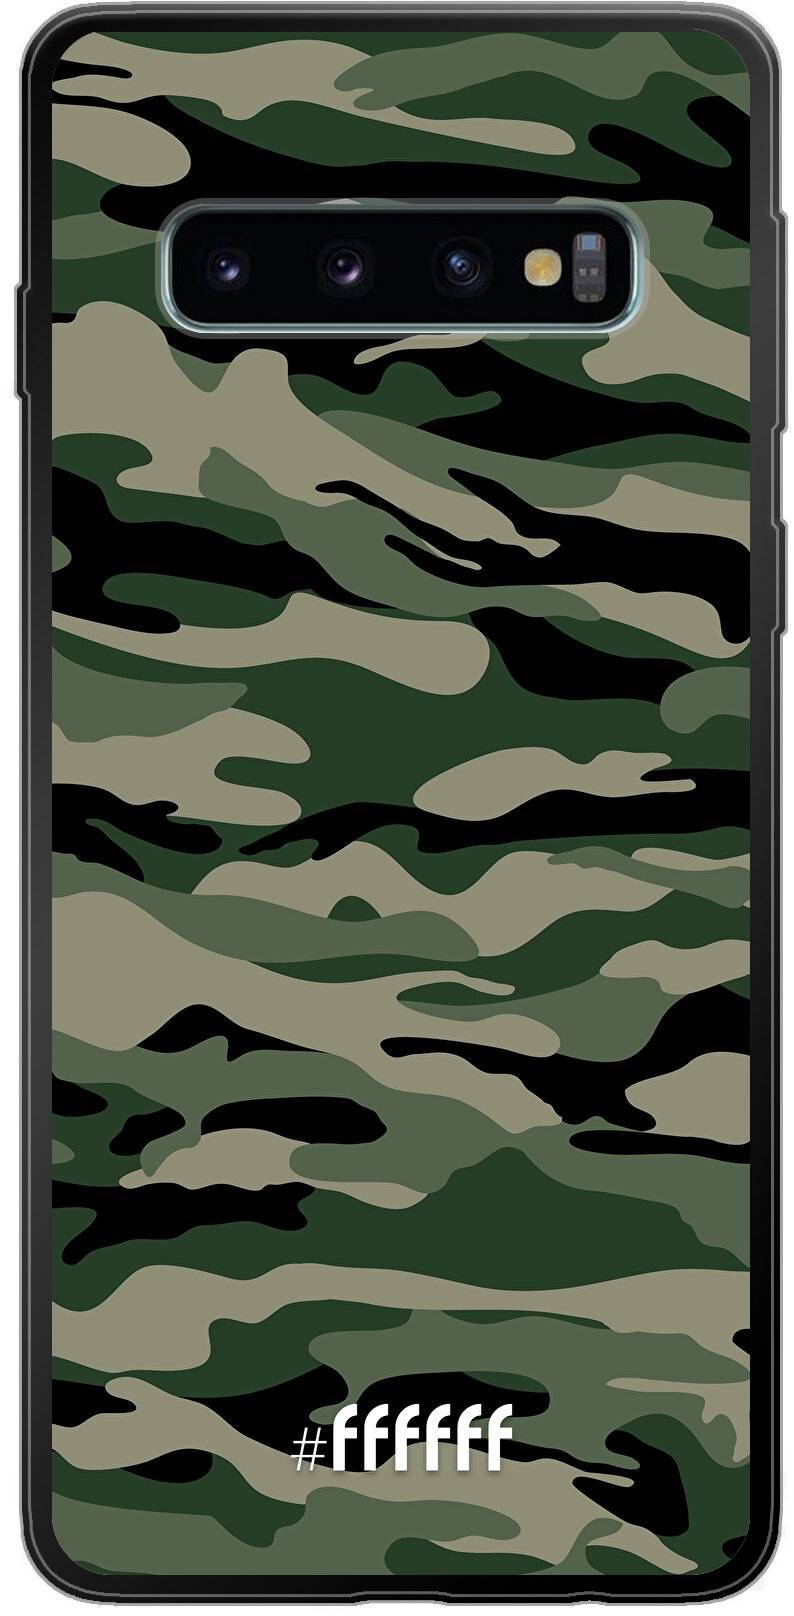 Woodland Camouflage Galaxy S10